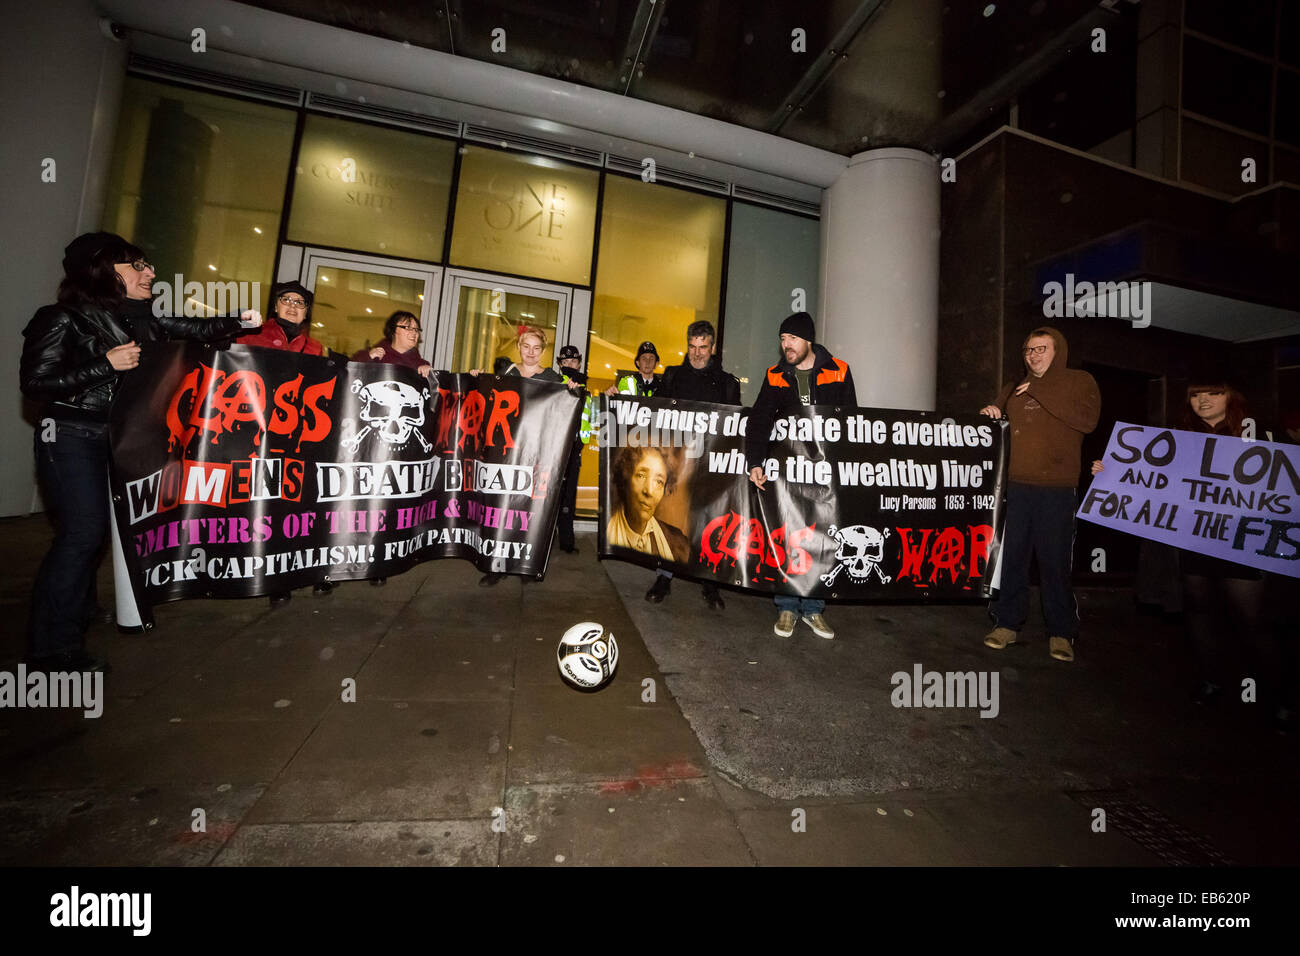 London, UK. 26. November 2014.  Klasse Krieg "Armen Tür" Segregation Protest Credit: Guy Corbishley/Alamy Live News Stockfoto